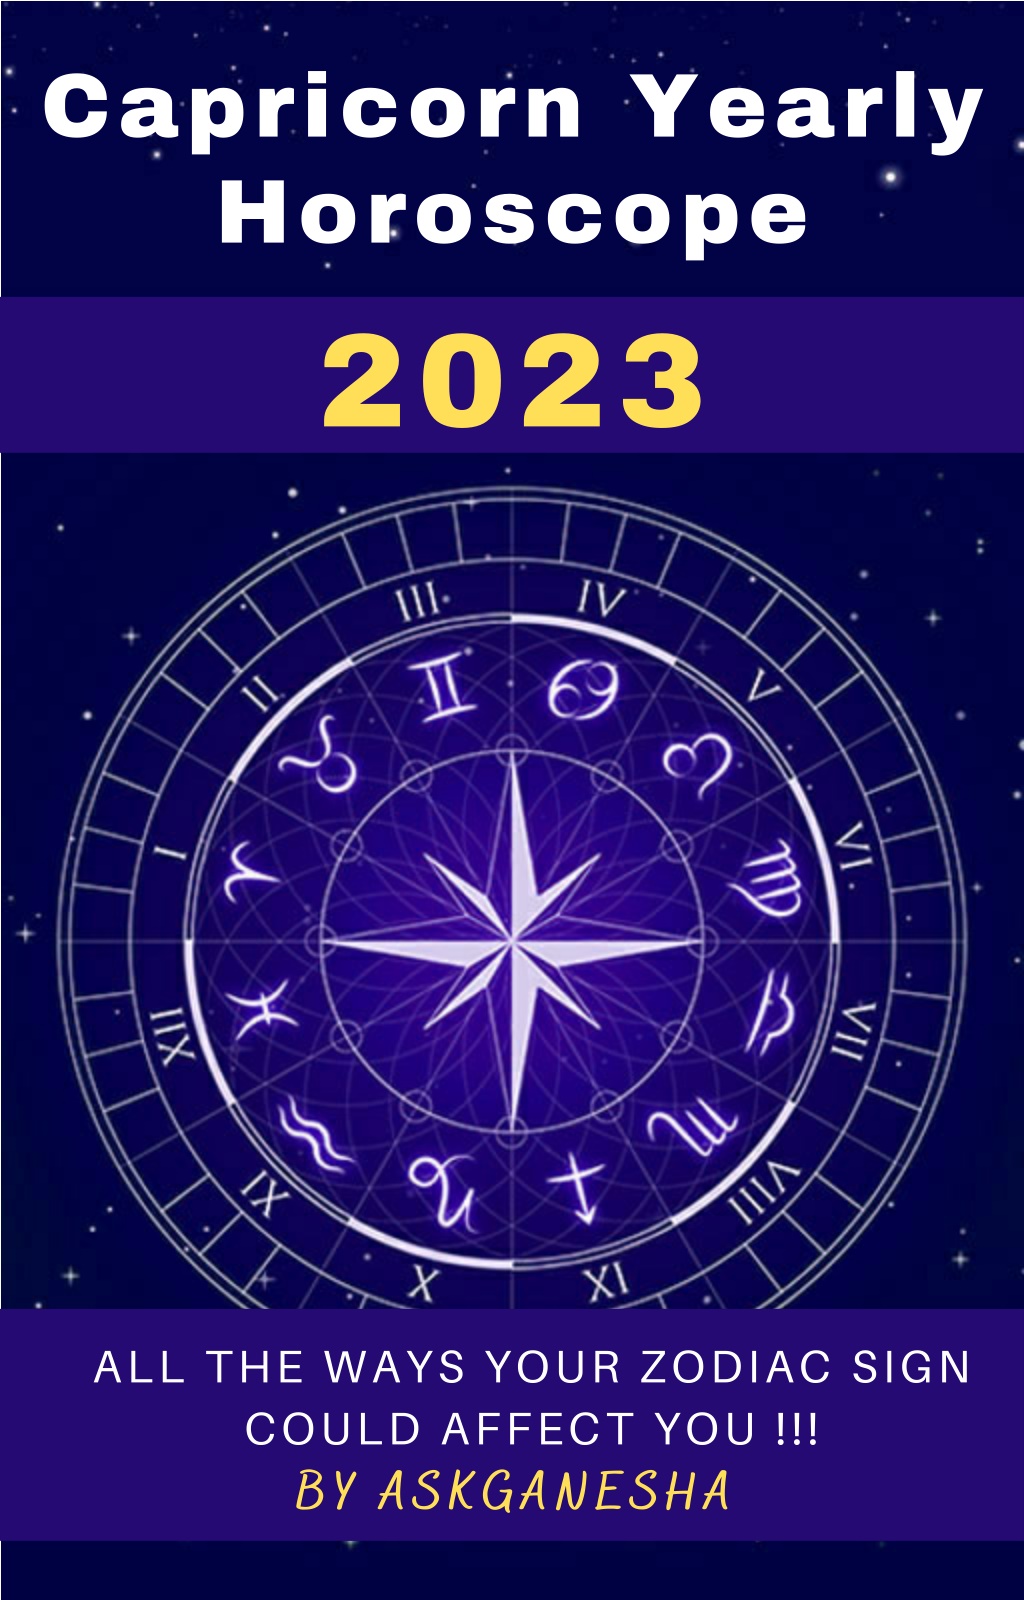 PPT Capricorn Yearly Horoscope 2023 PowerPoint Presentation, free